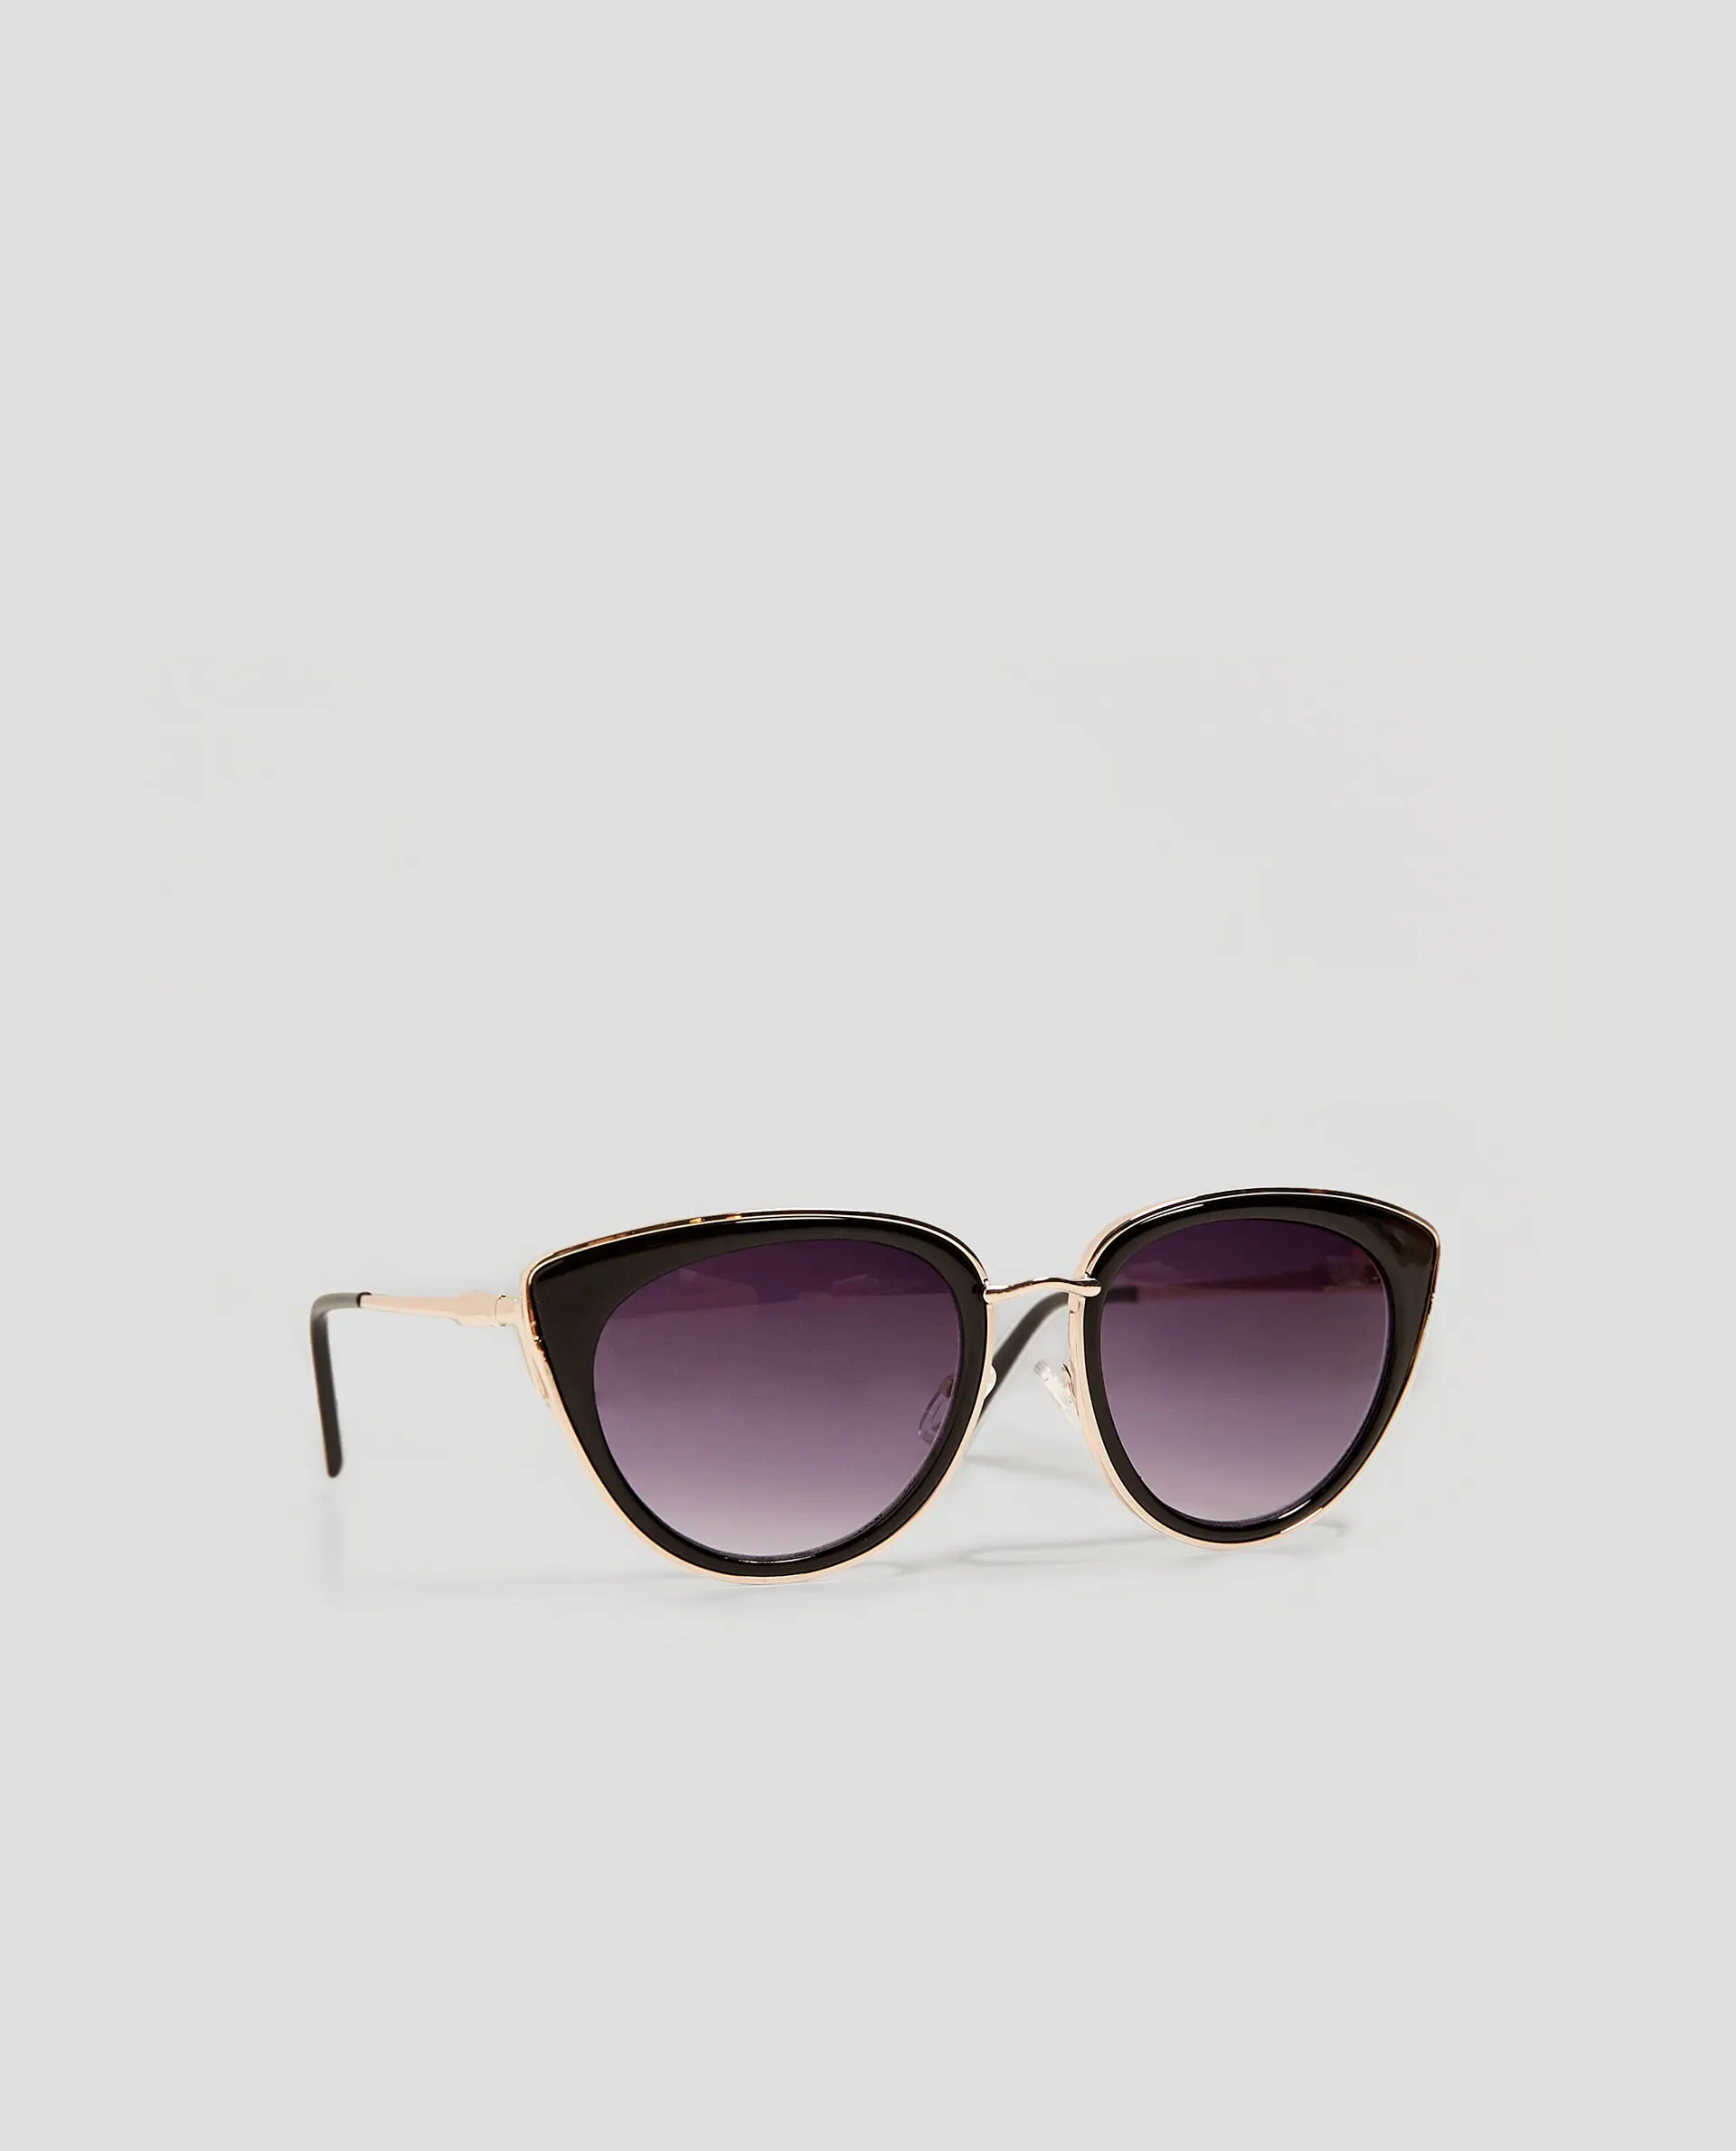 Cat’s Eye Sunglasses. Zara.